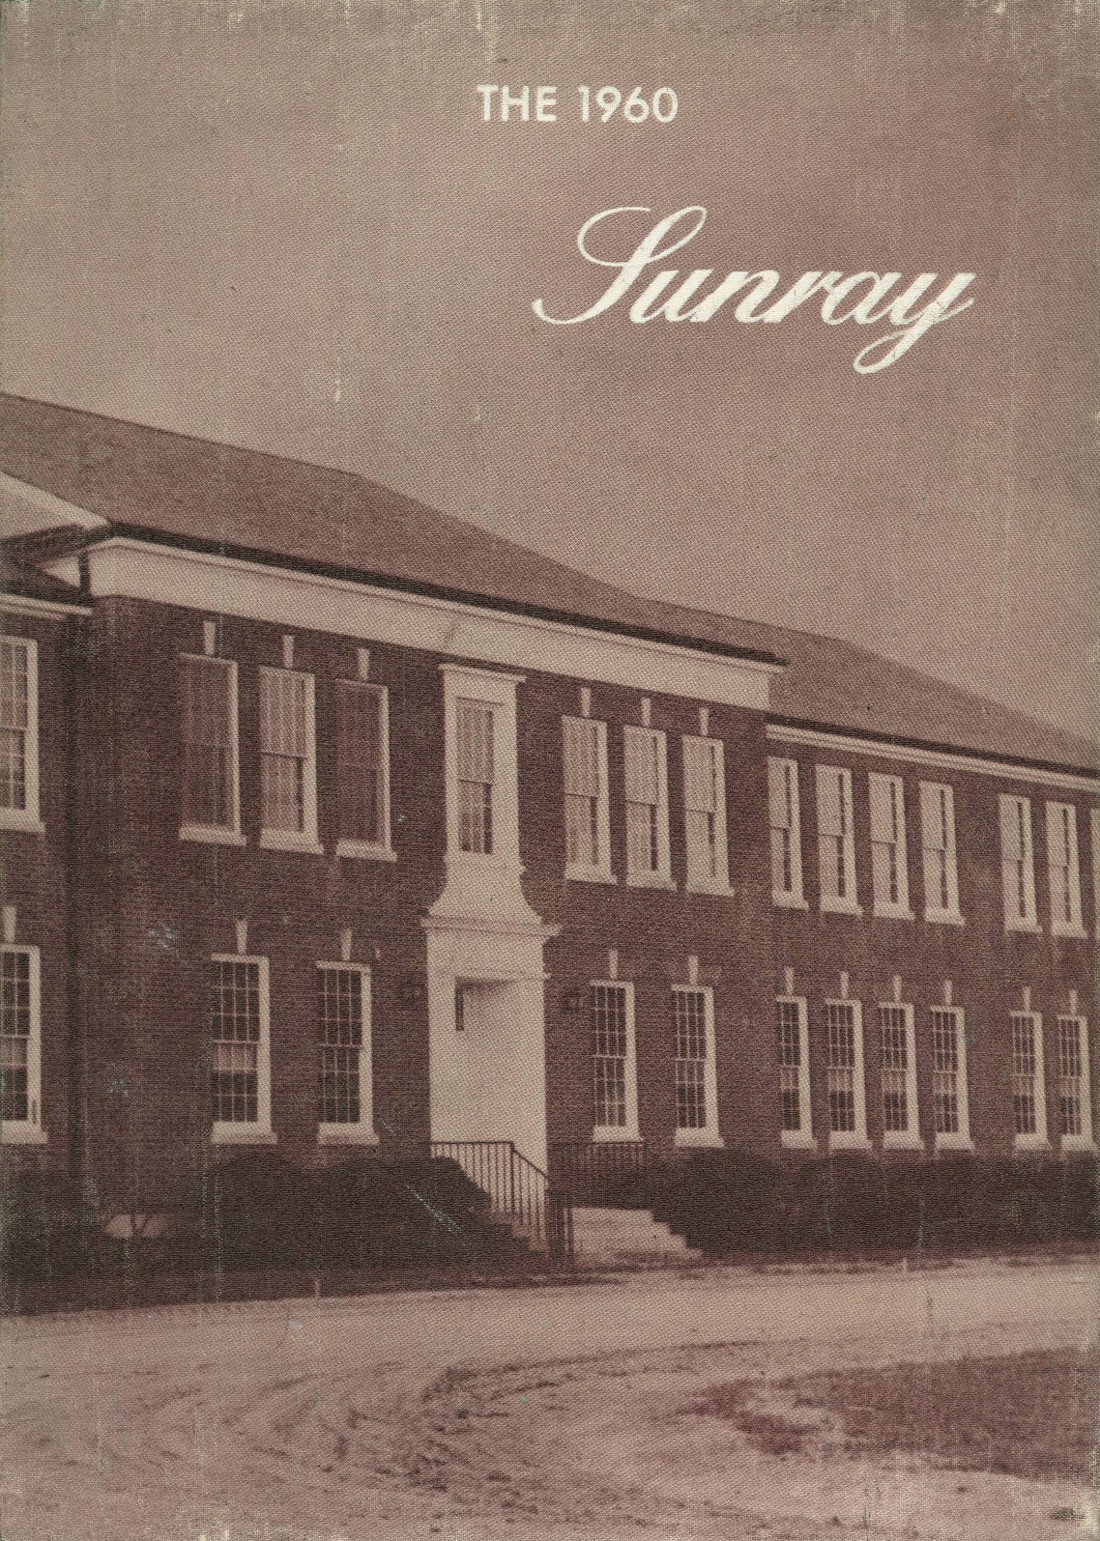 1960 yearbook from Sunbury High School from Sunbury, North Carolina for ...